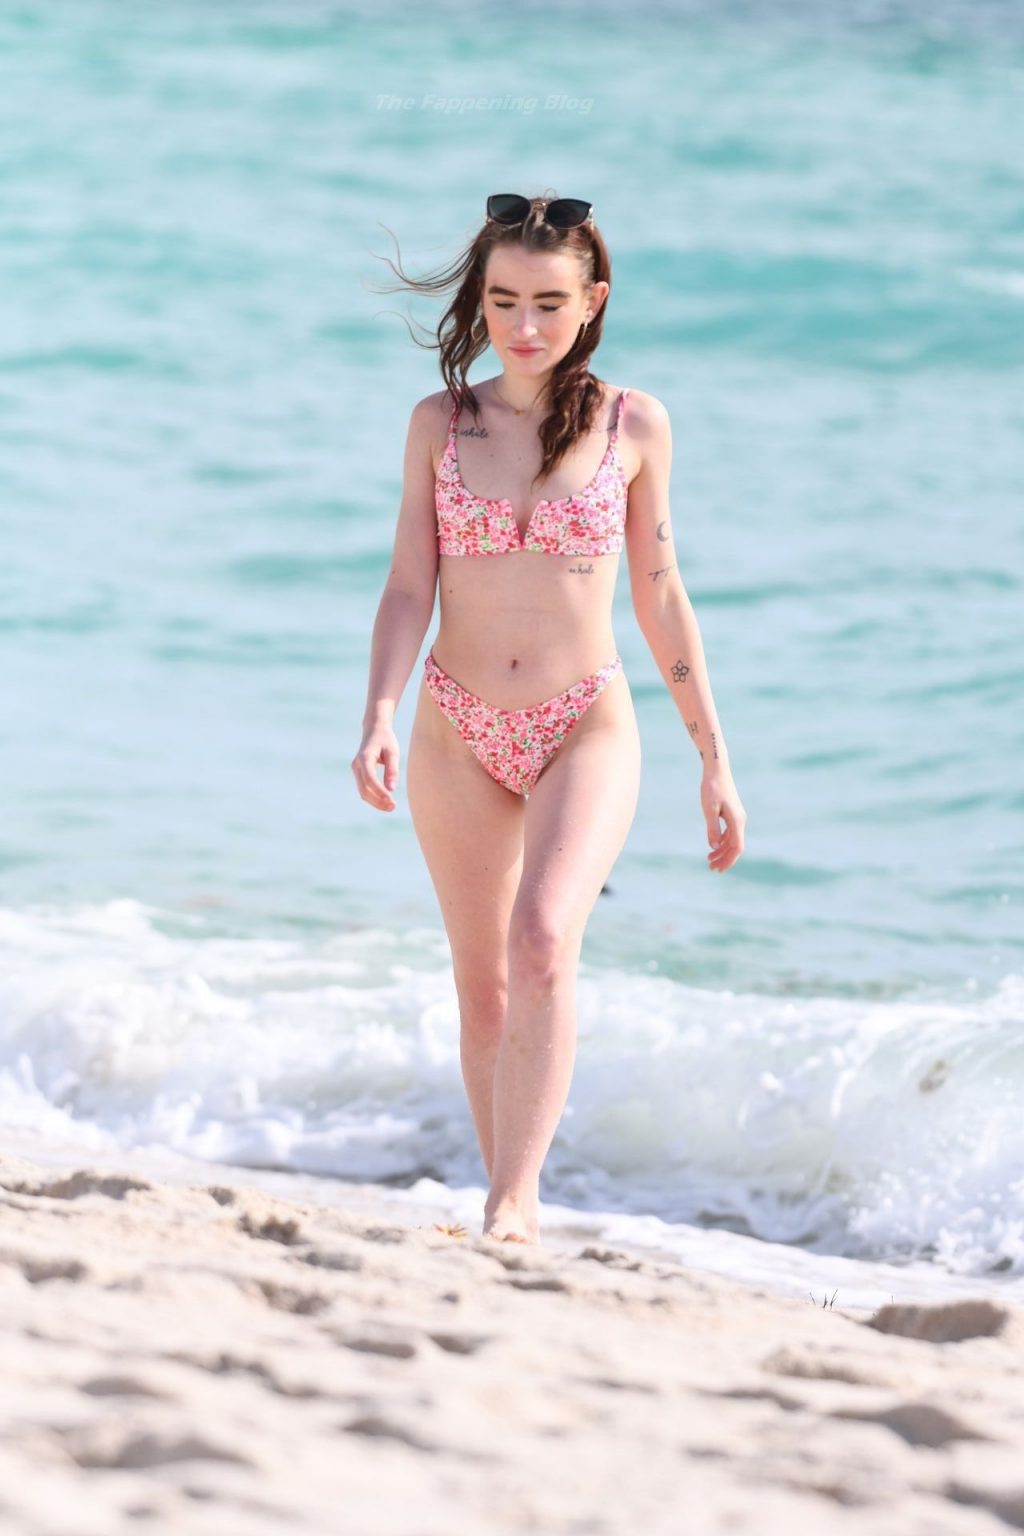 Urszula Makowska Displays Her Sexy Bikini Body on the Beach in Miami (16 Photos)